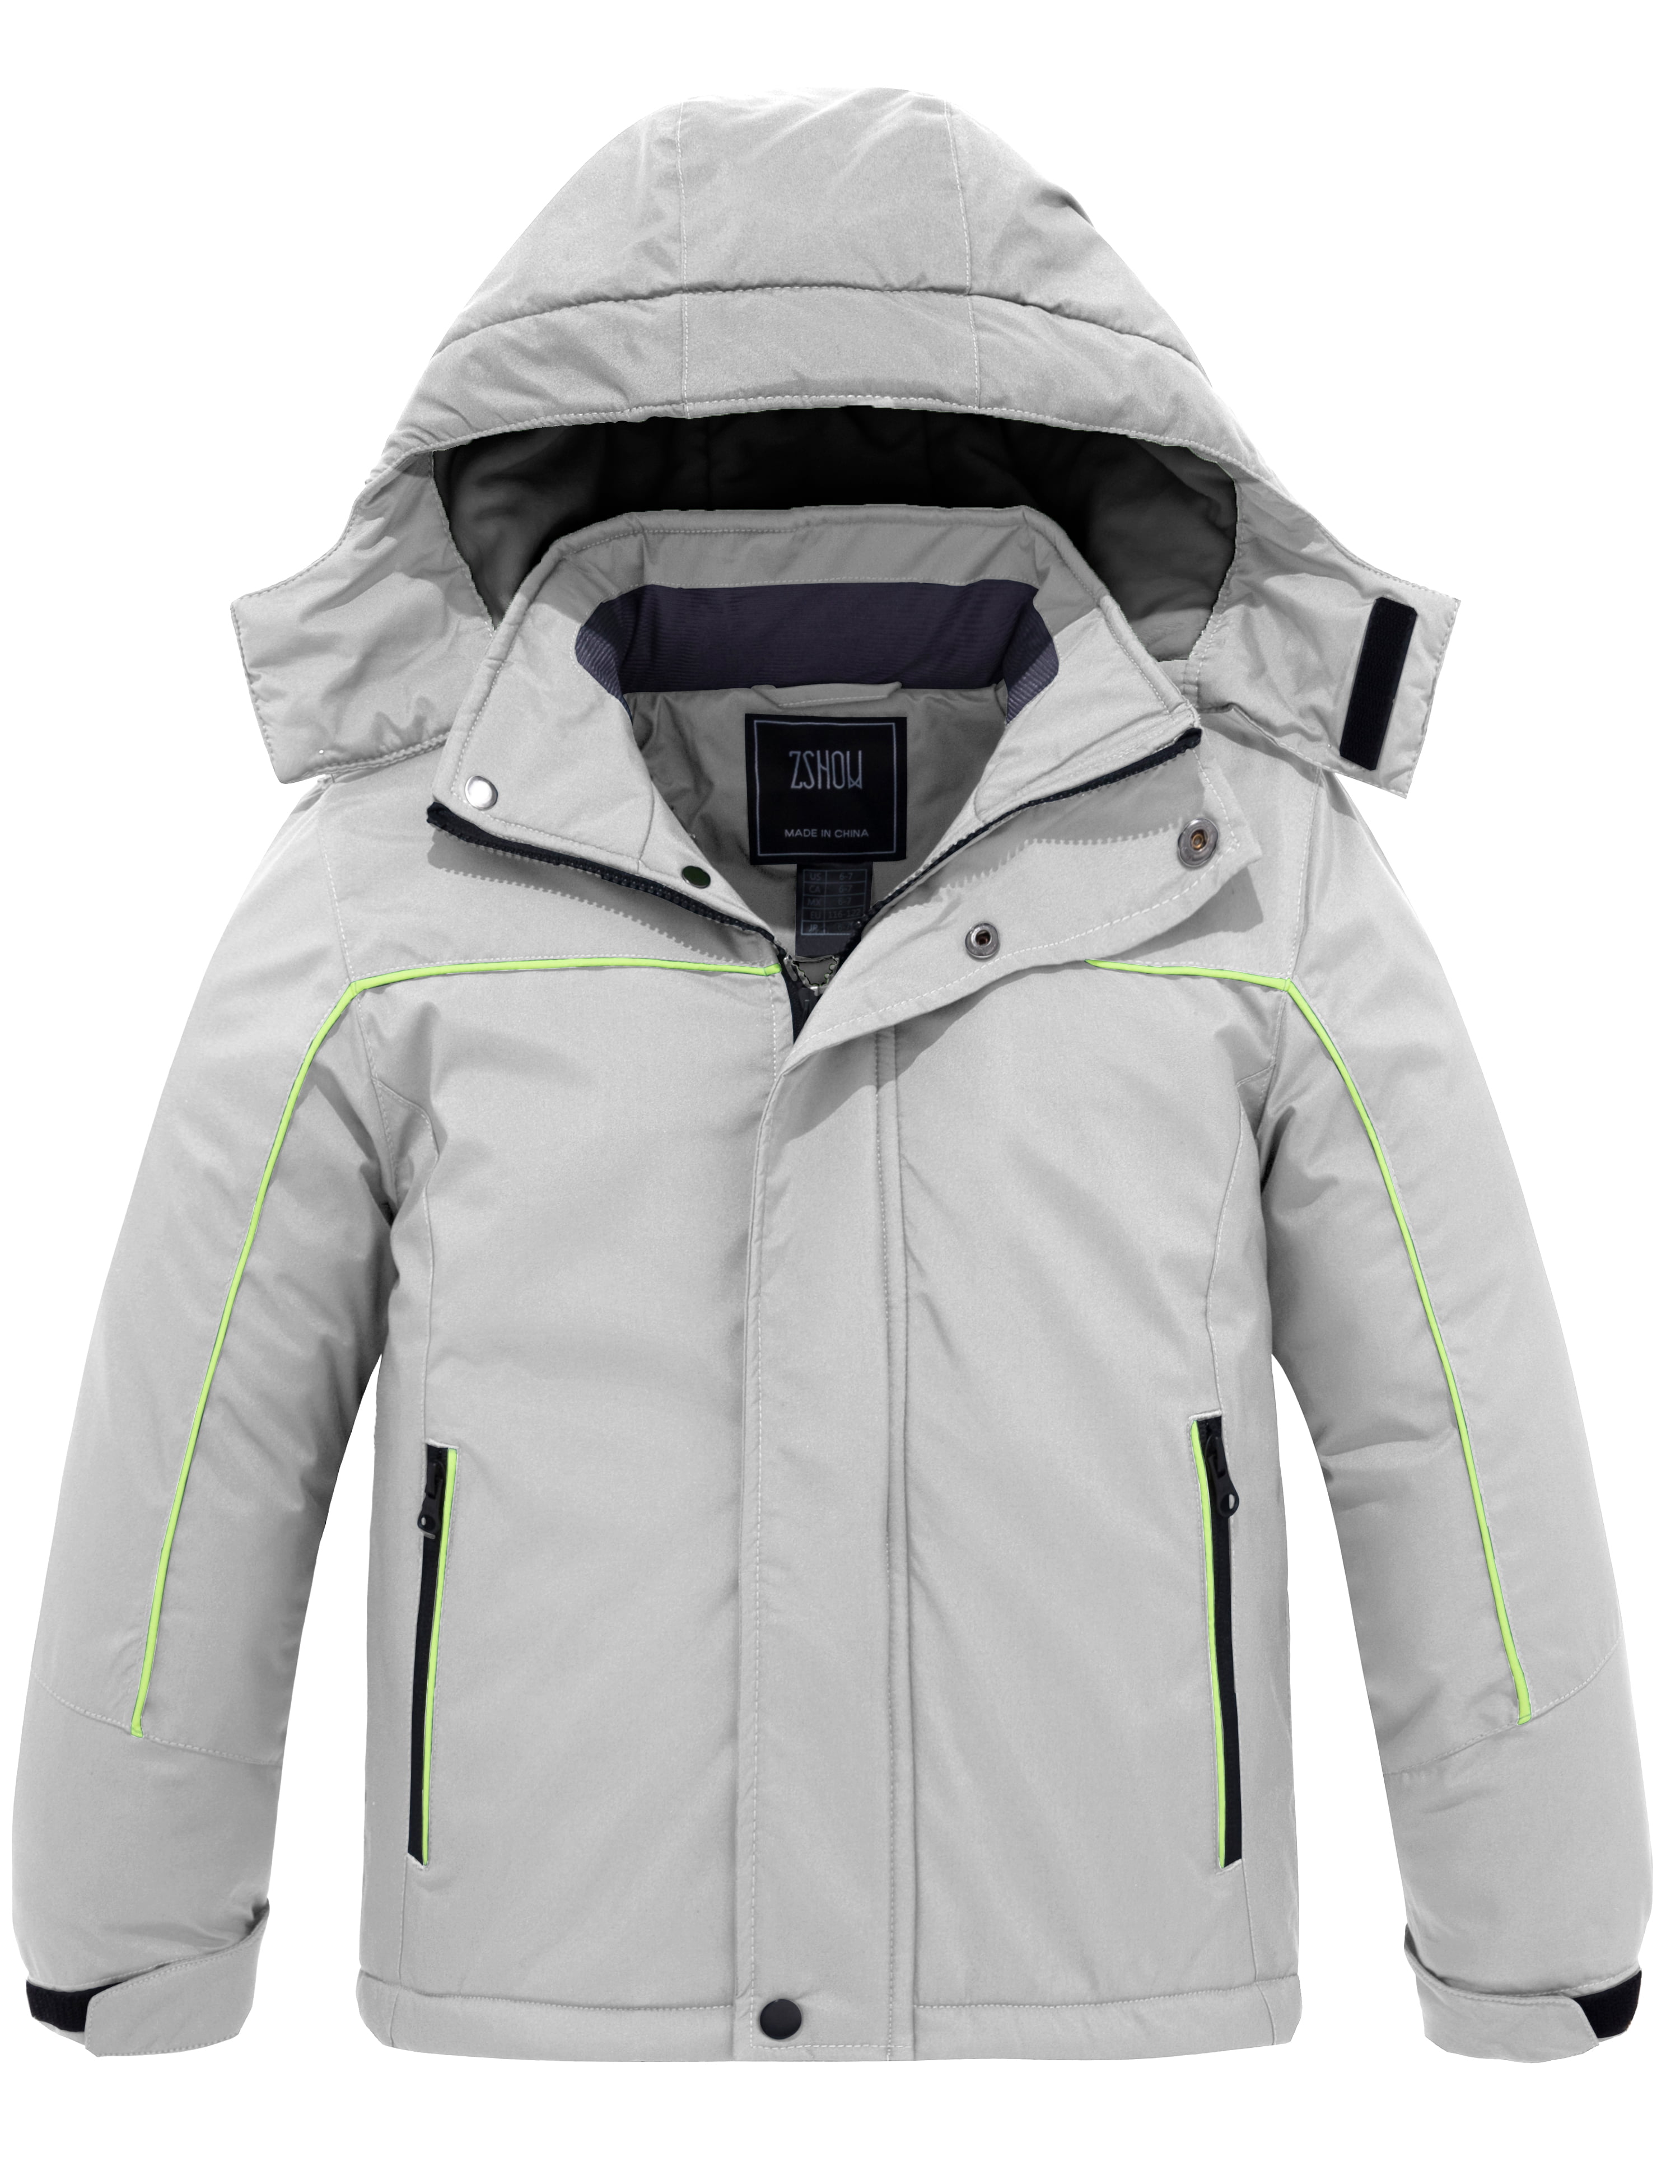 Boy's Waterproof Ski Jacket,Kids Outdoor Snowboarding Windproof Jacket,Fleece Lined Hooded,Warm Winter Snow Coat 